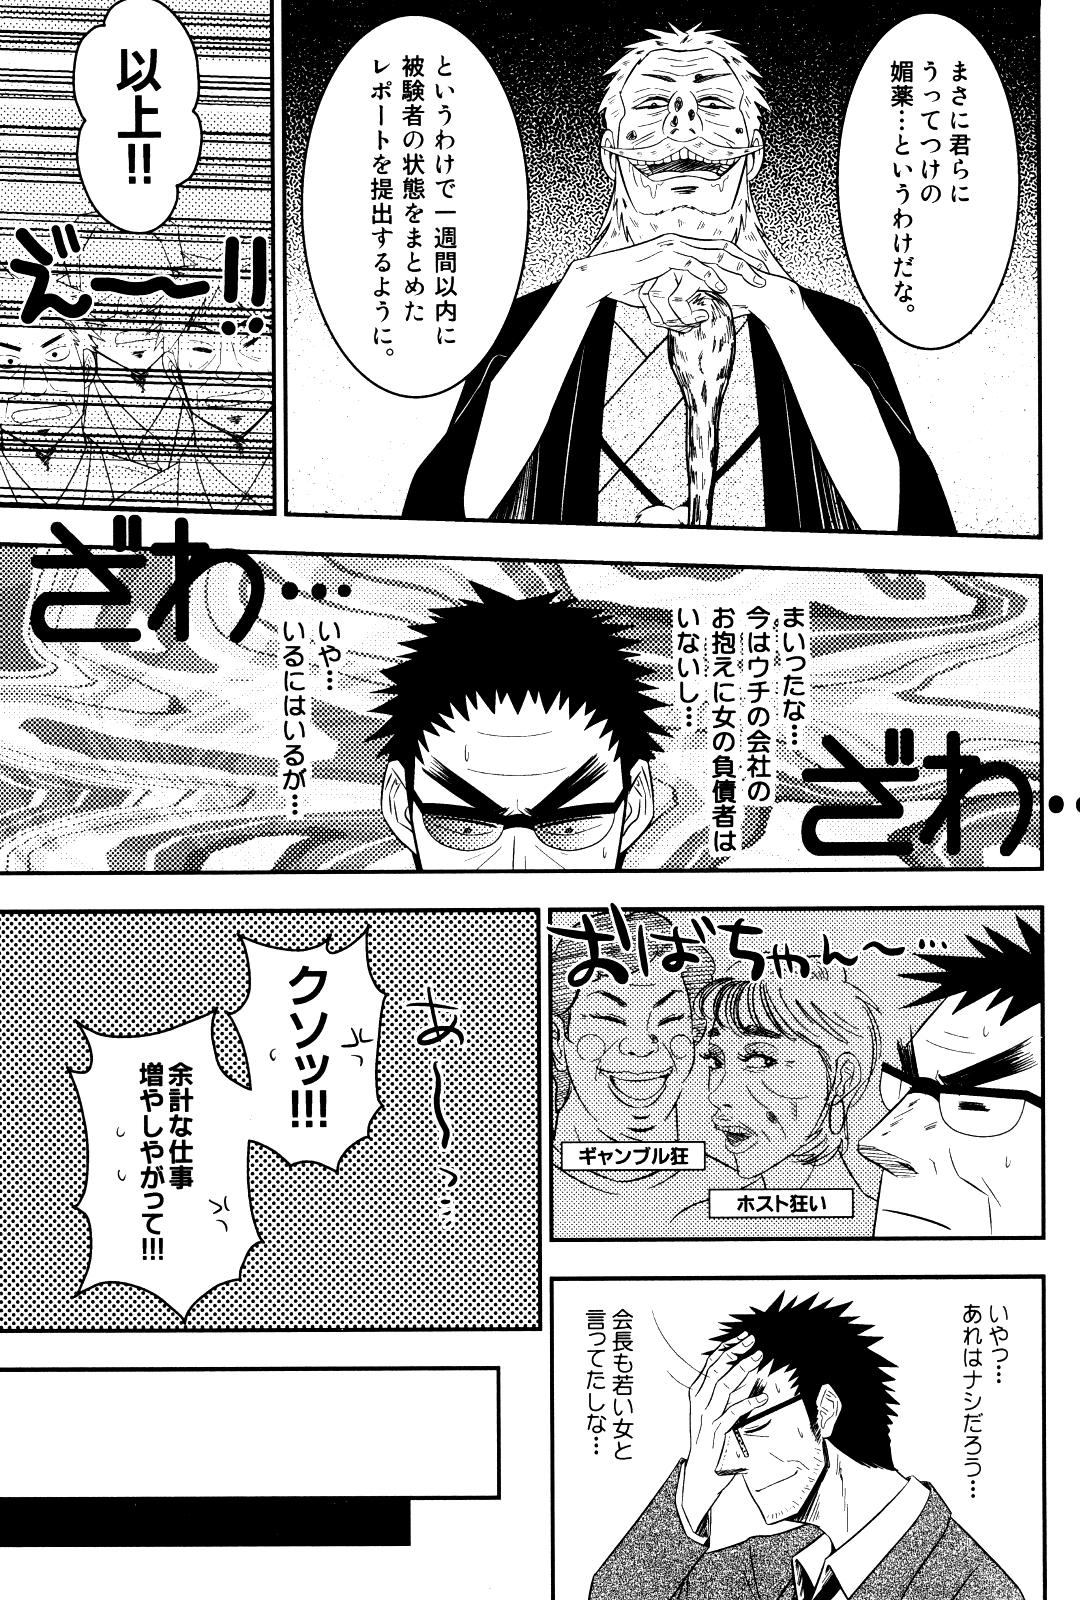 Gostosa LOVE POISON - Kaiji College - Page 6